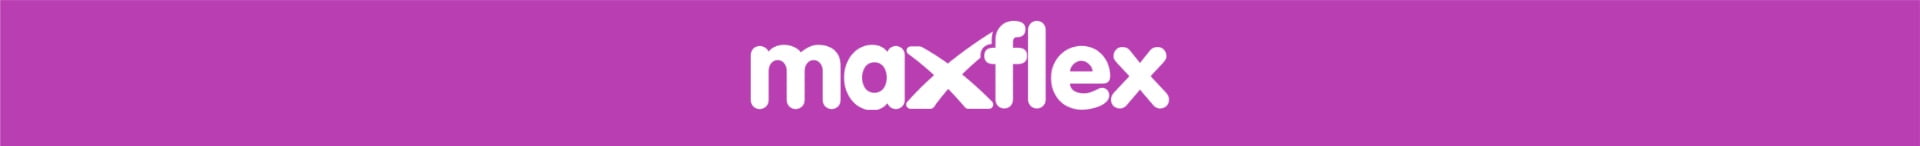 MaxFlex title banner